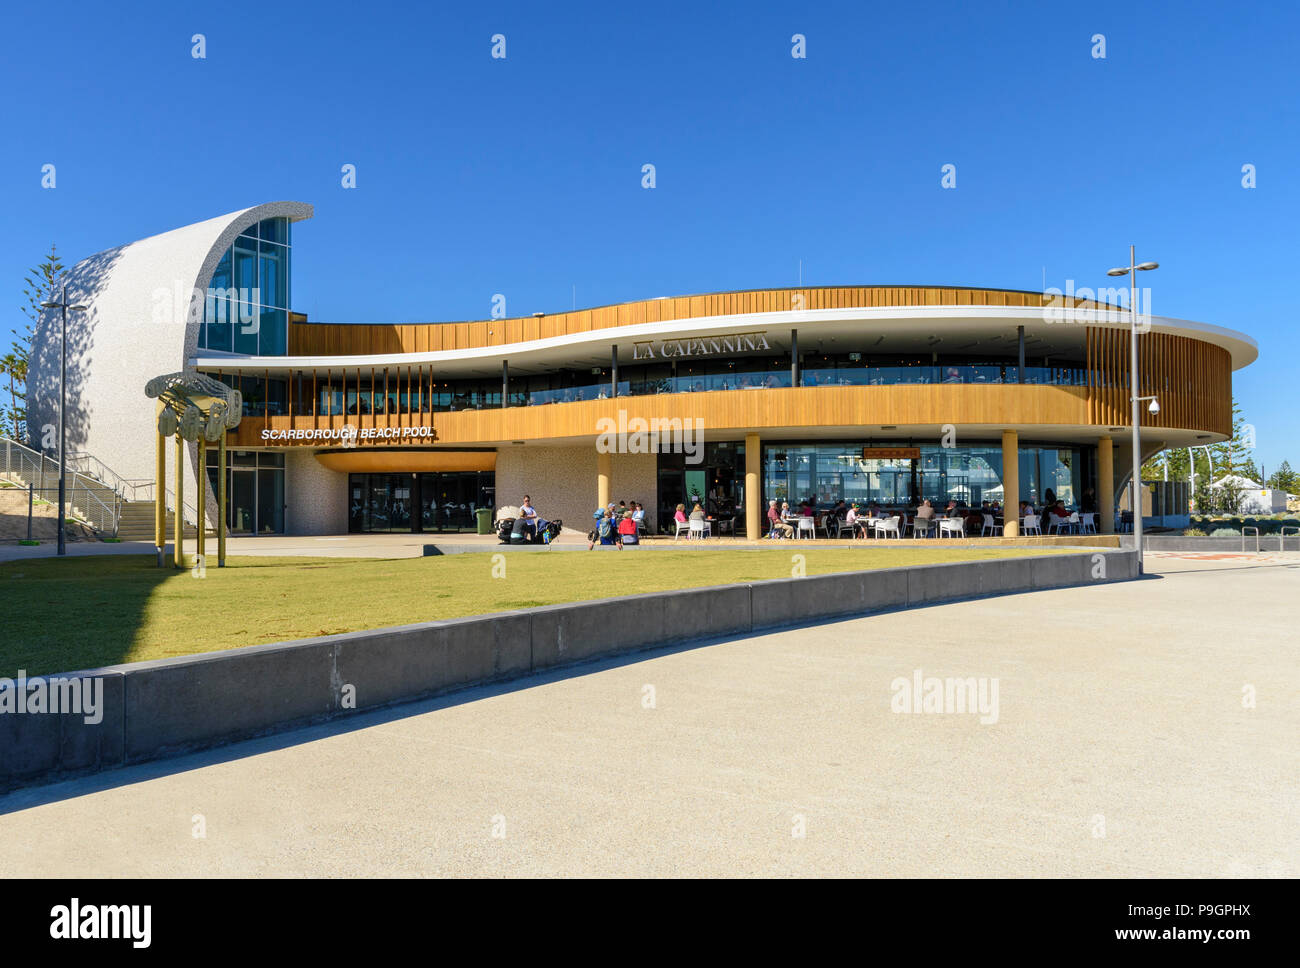 The new Scarborough Beach Pool restaurant and cafe, Scarborough Beach, Perth, Western Australia Stock Photo